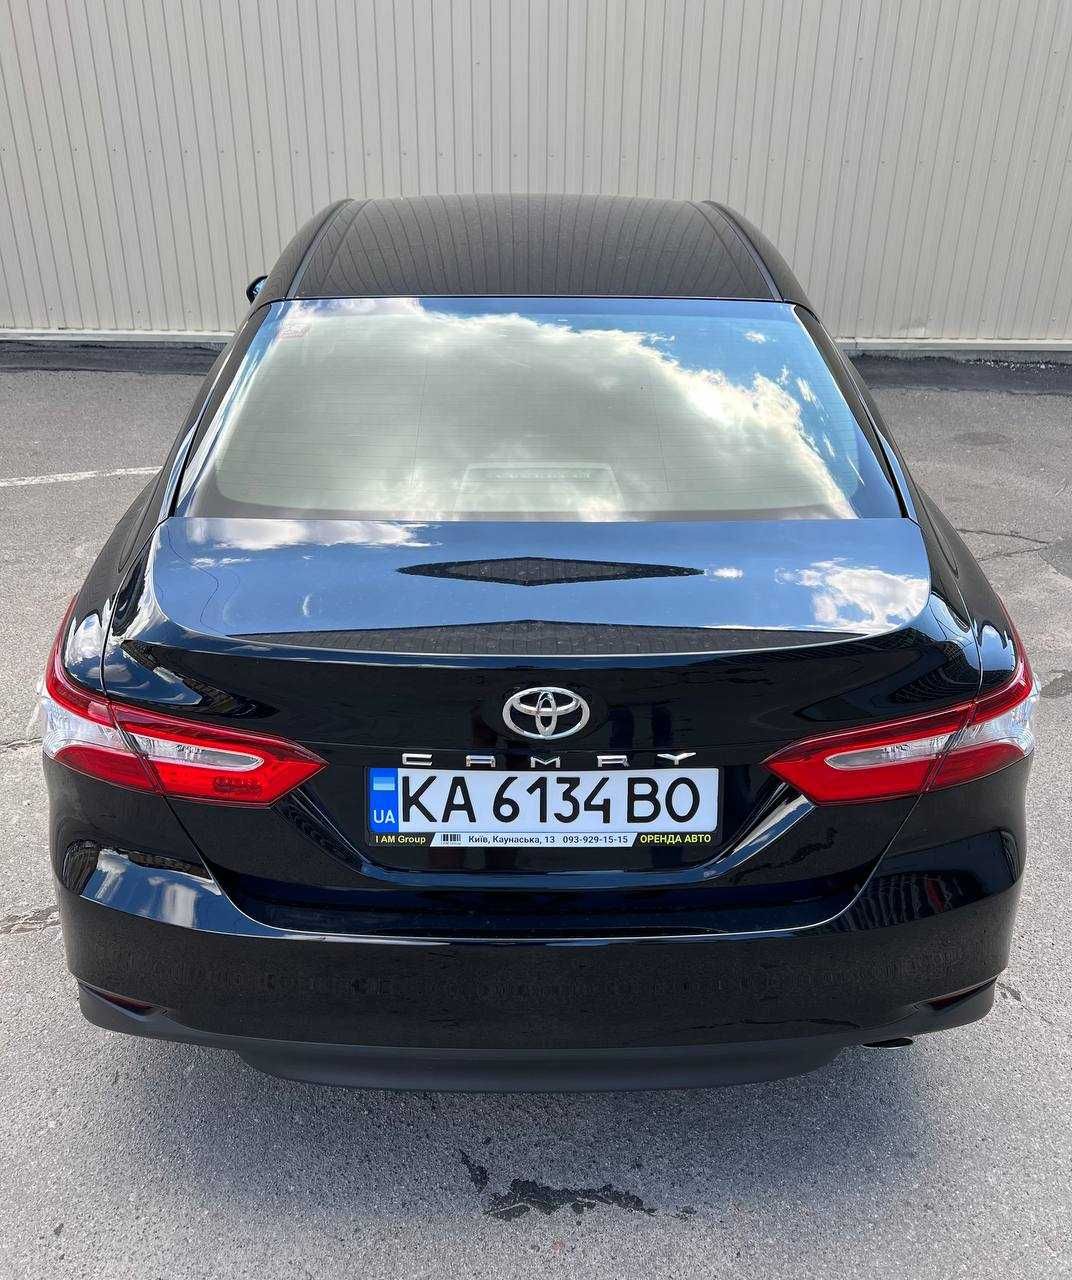 Оренда автомобіля прокат авто Київ Toyota Camry 2020